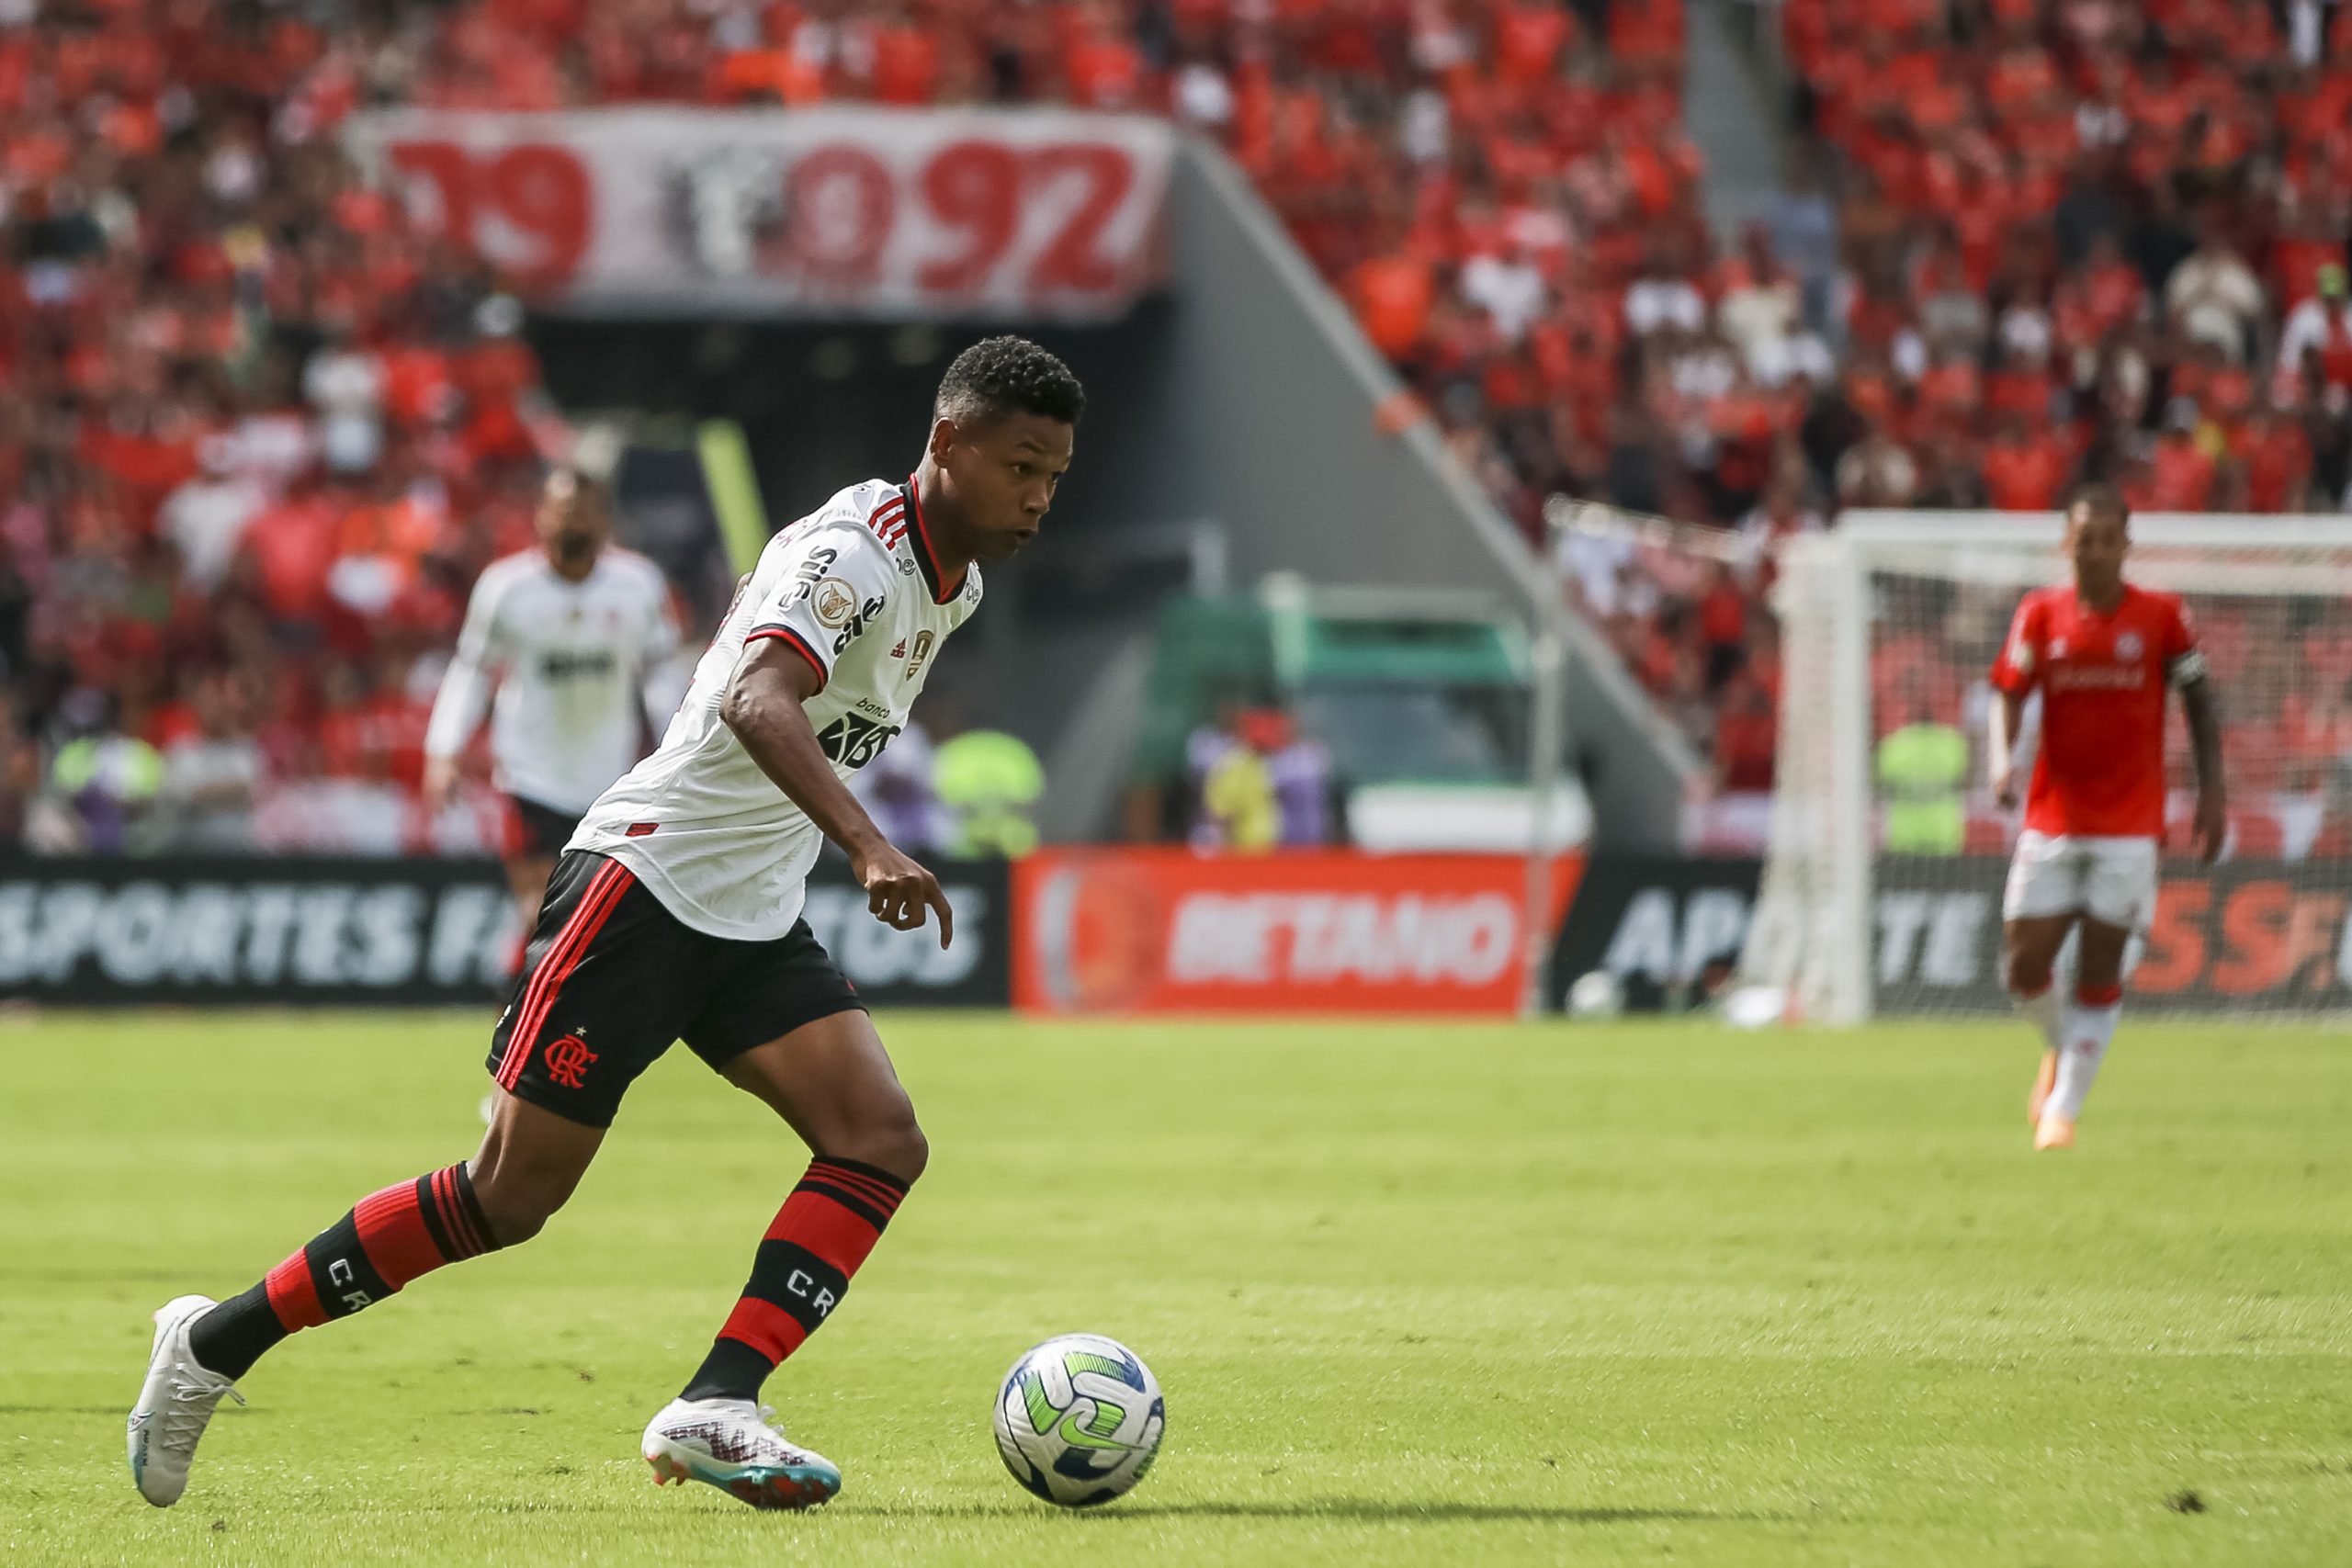 Matheus Franca runs with the ball during a game against Internacional.